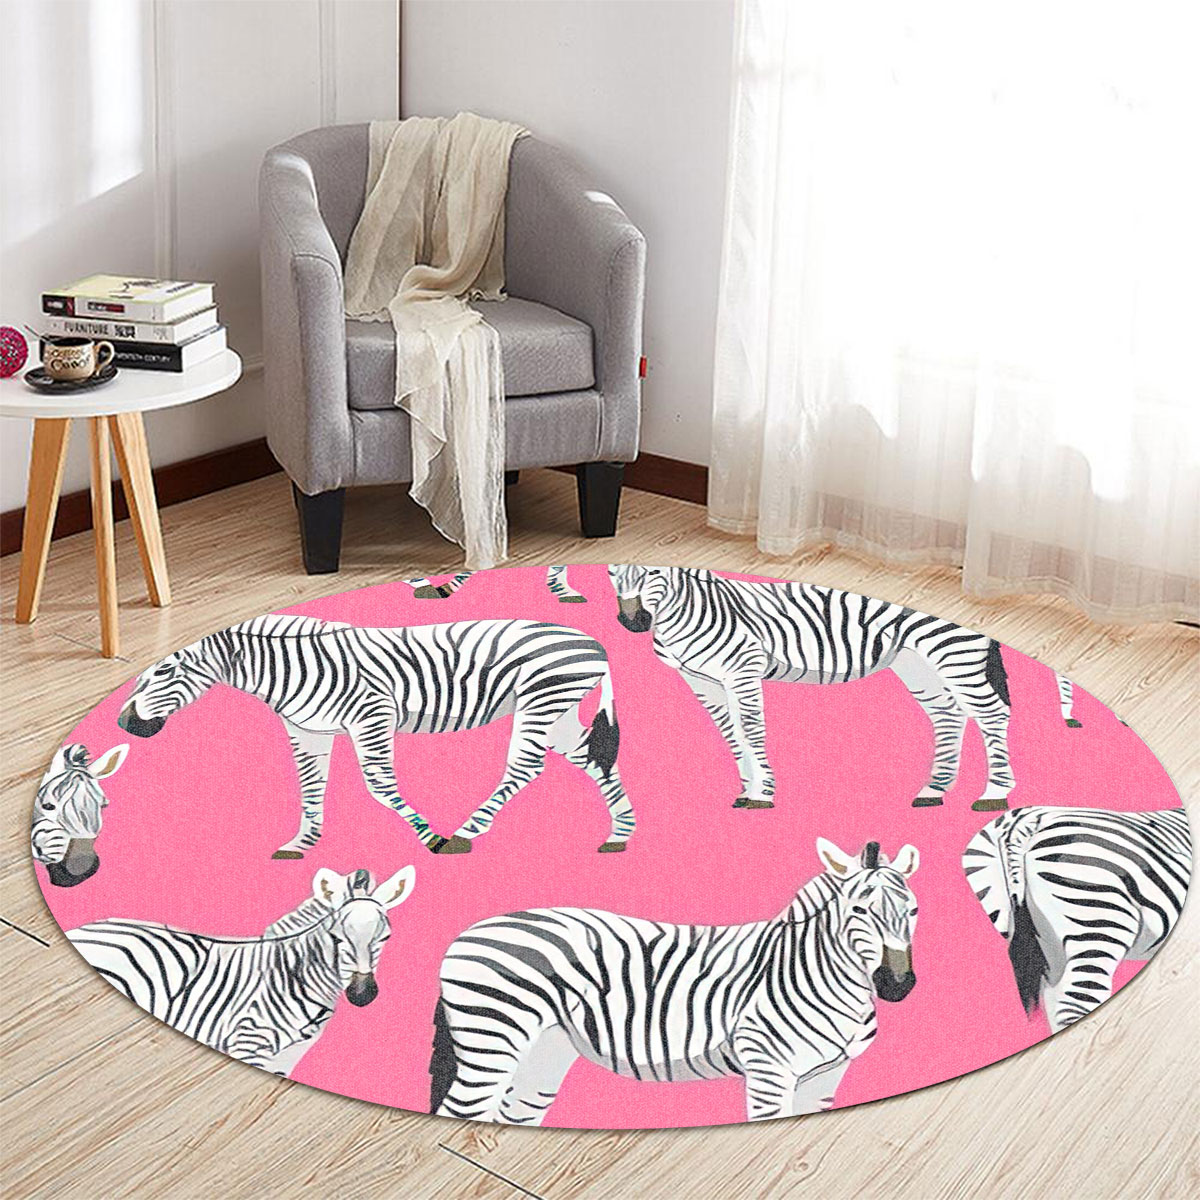 Zebra On Pink Round Carpet 6